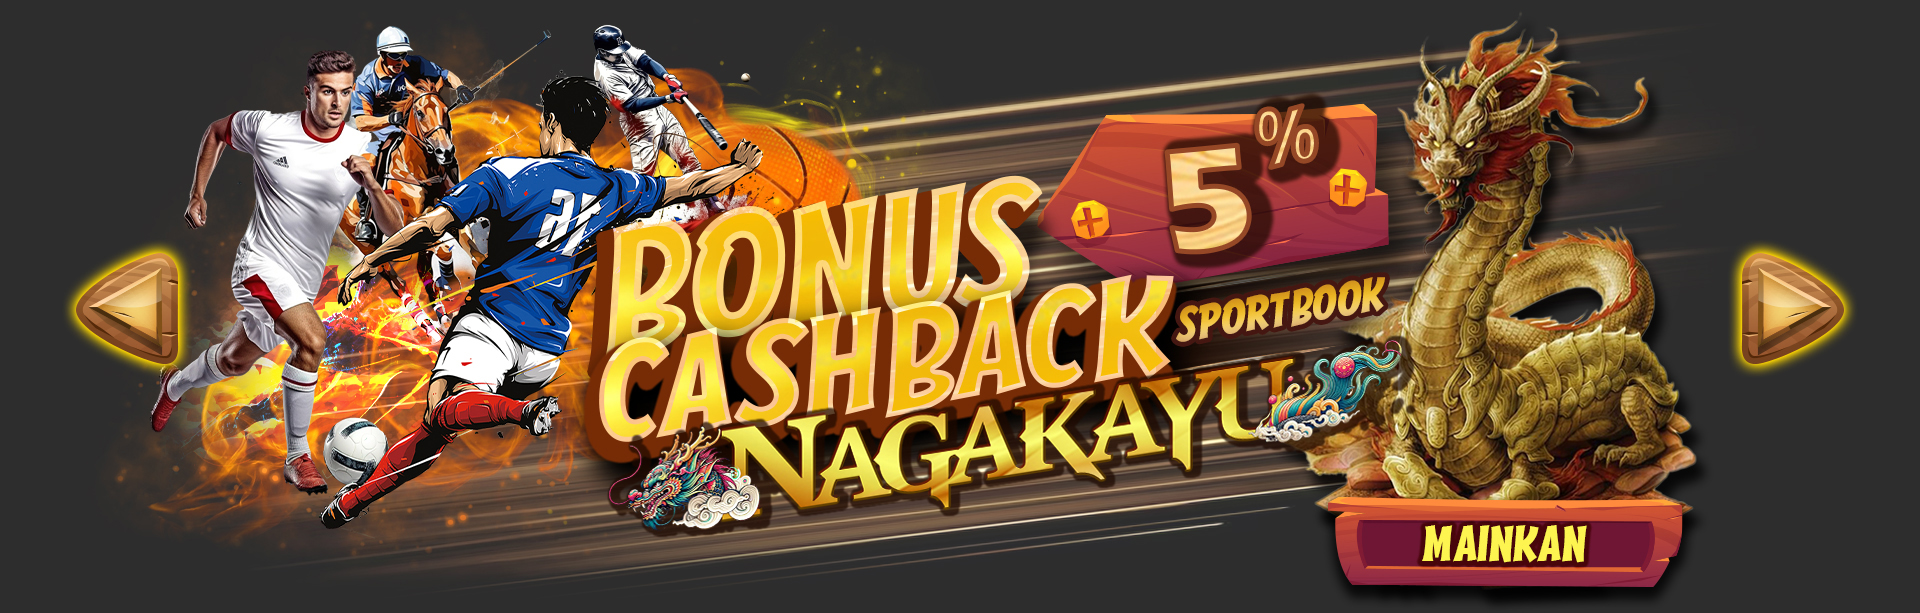 Bonus Cashback Sportsbook Nagakayu